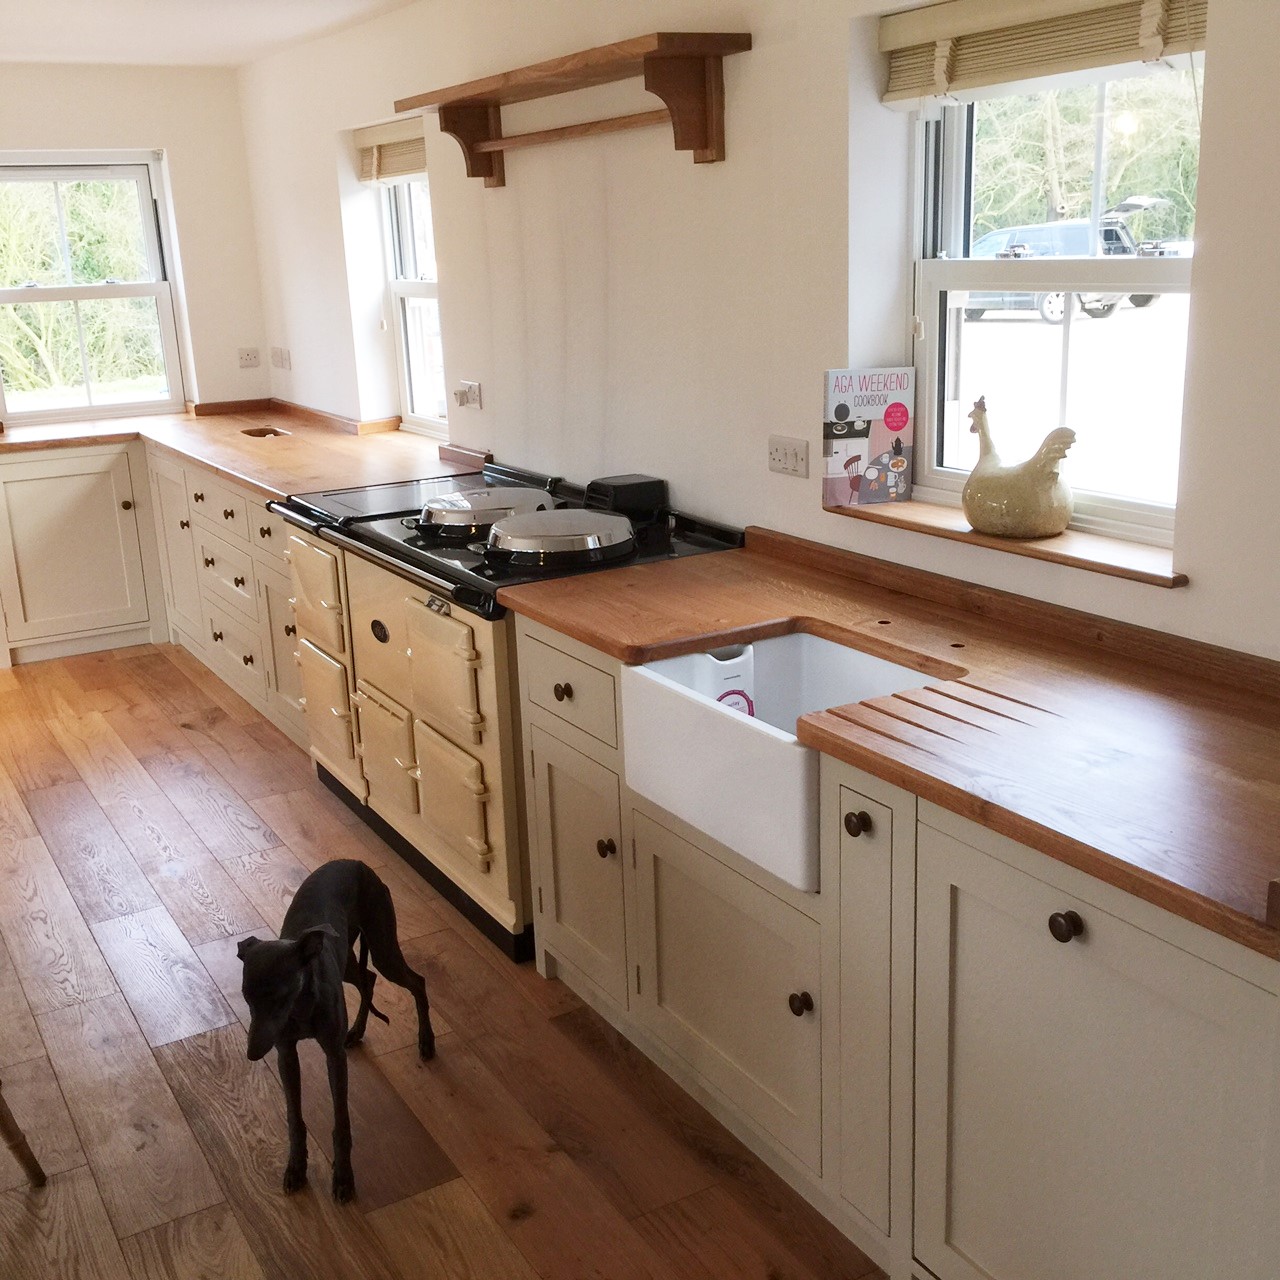 Bespoke hand built kitchen in solid wood shaker style with wide plank oak surface tops .Belfast sink.